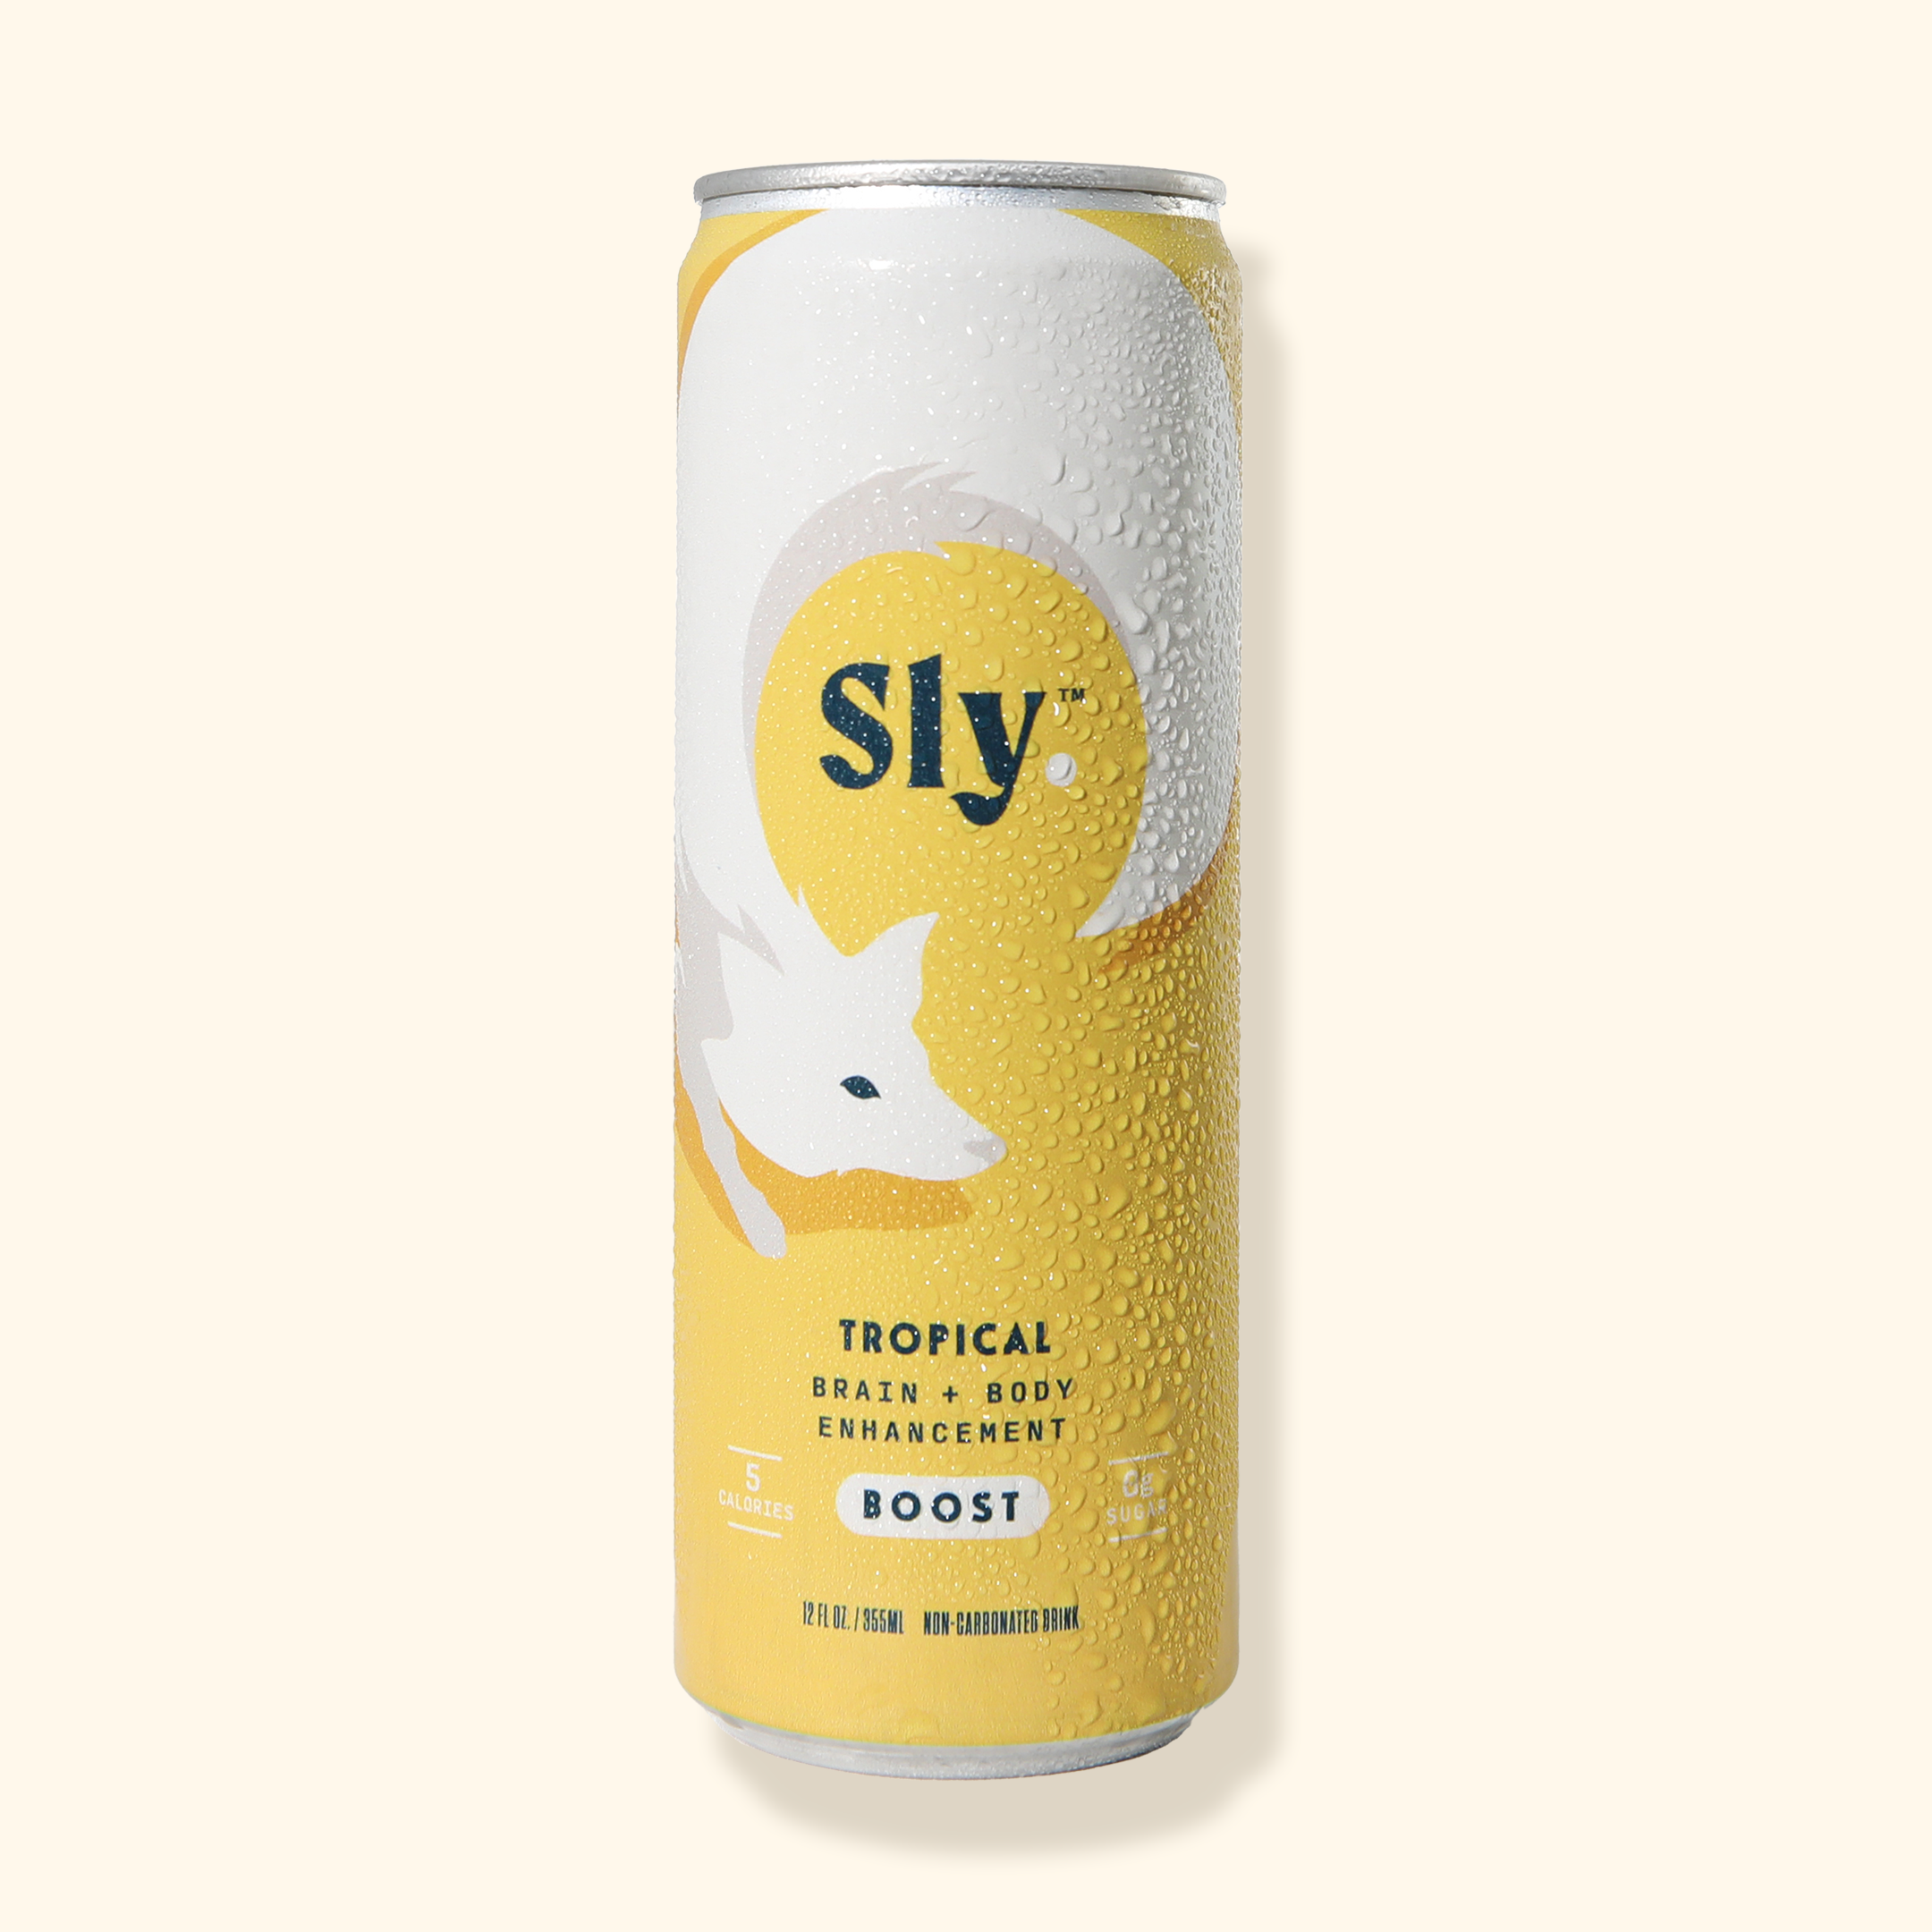 Sly™ BOOST Berry - 12oz Brain + Body Beverage